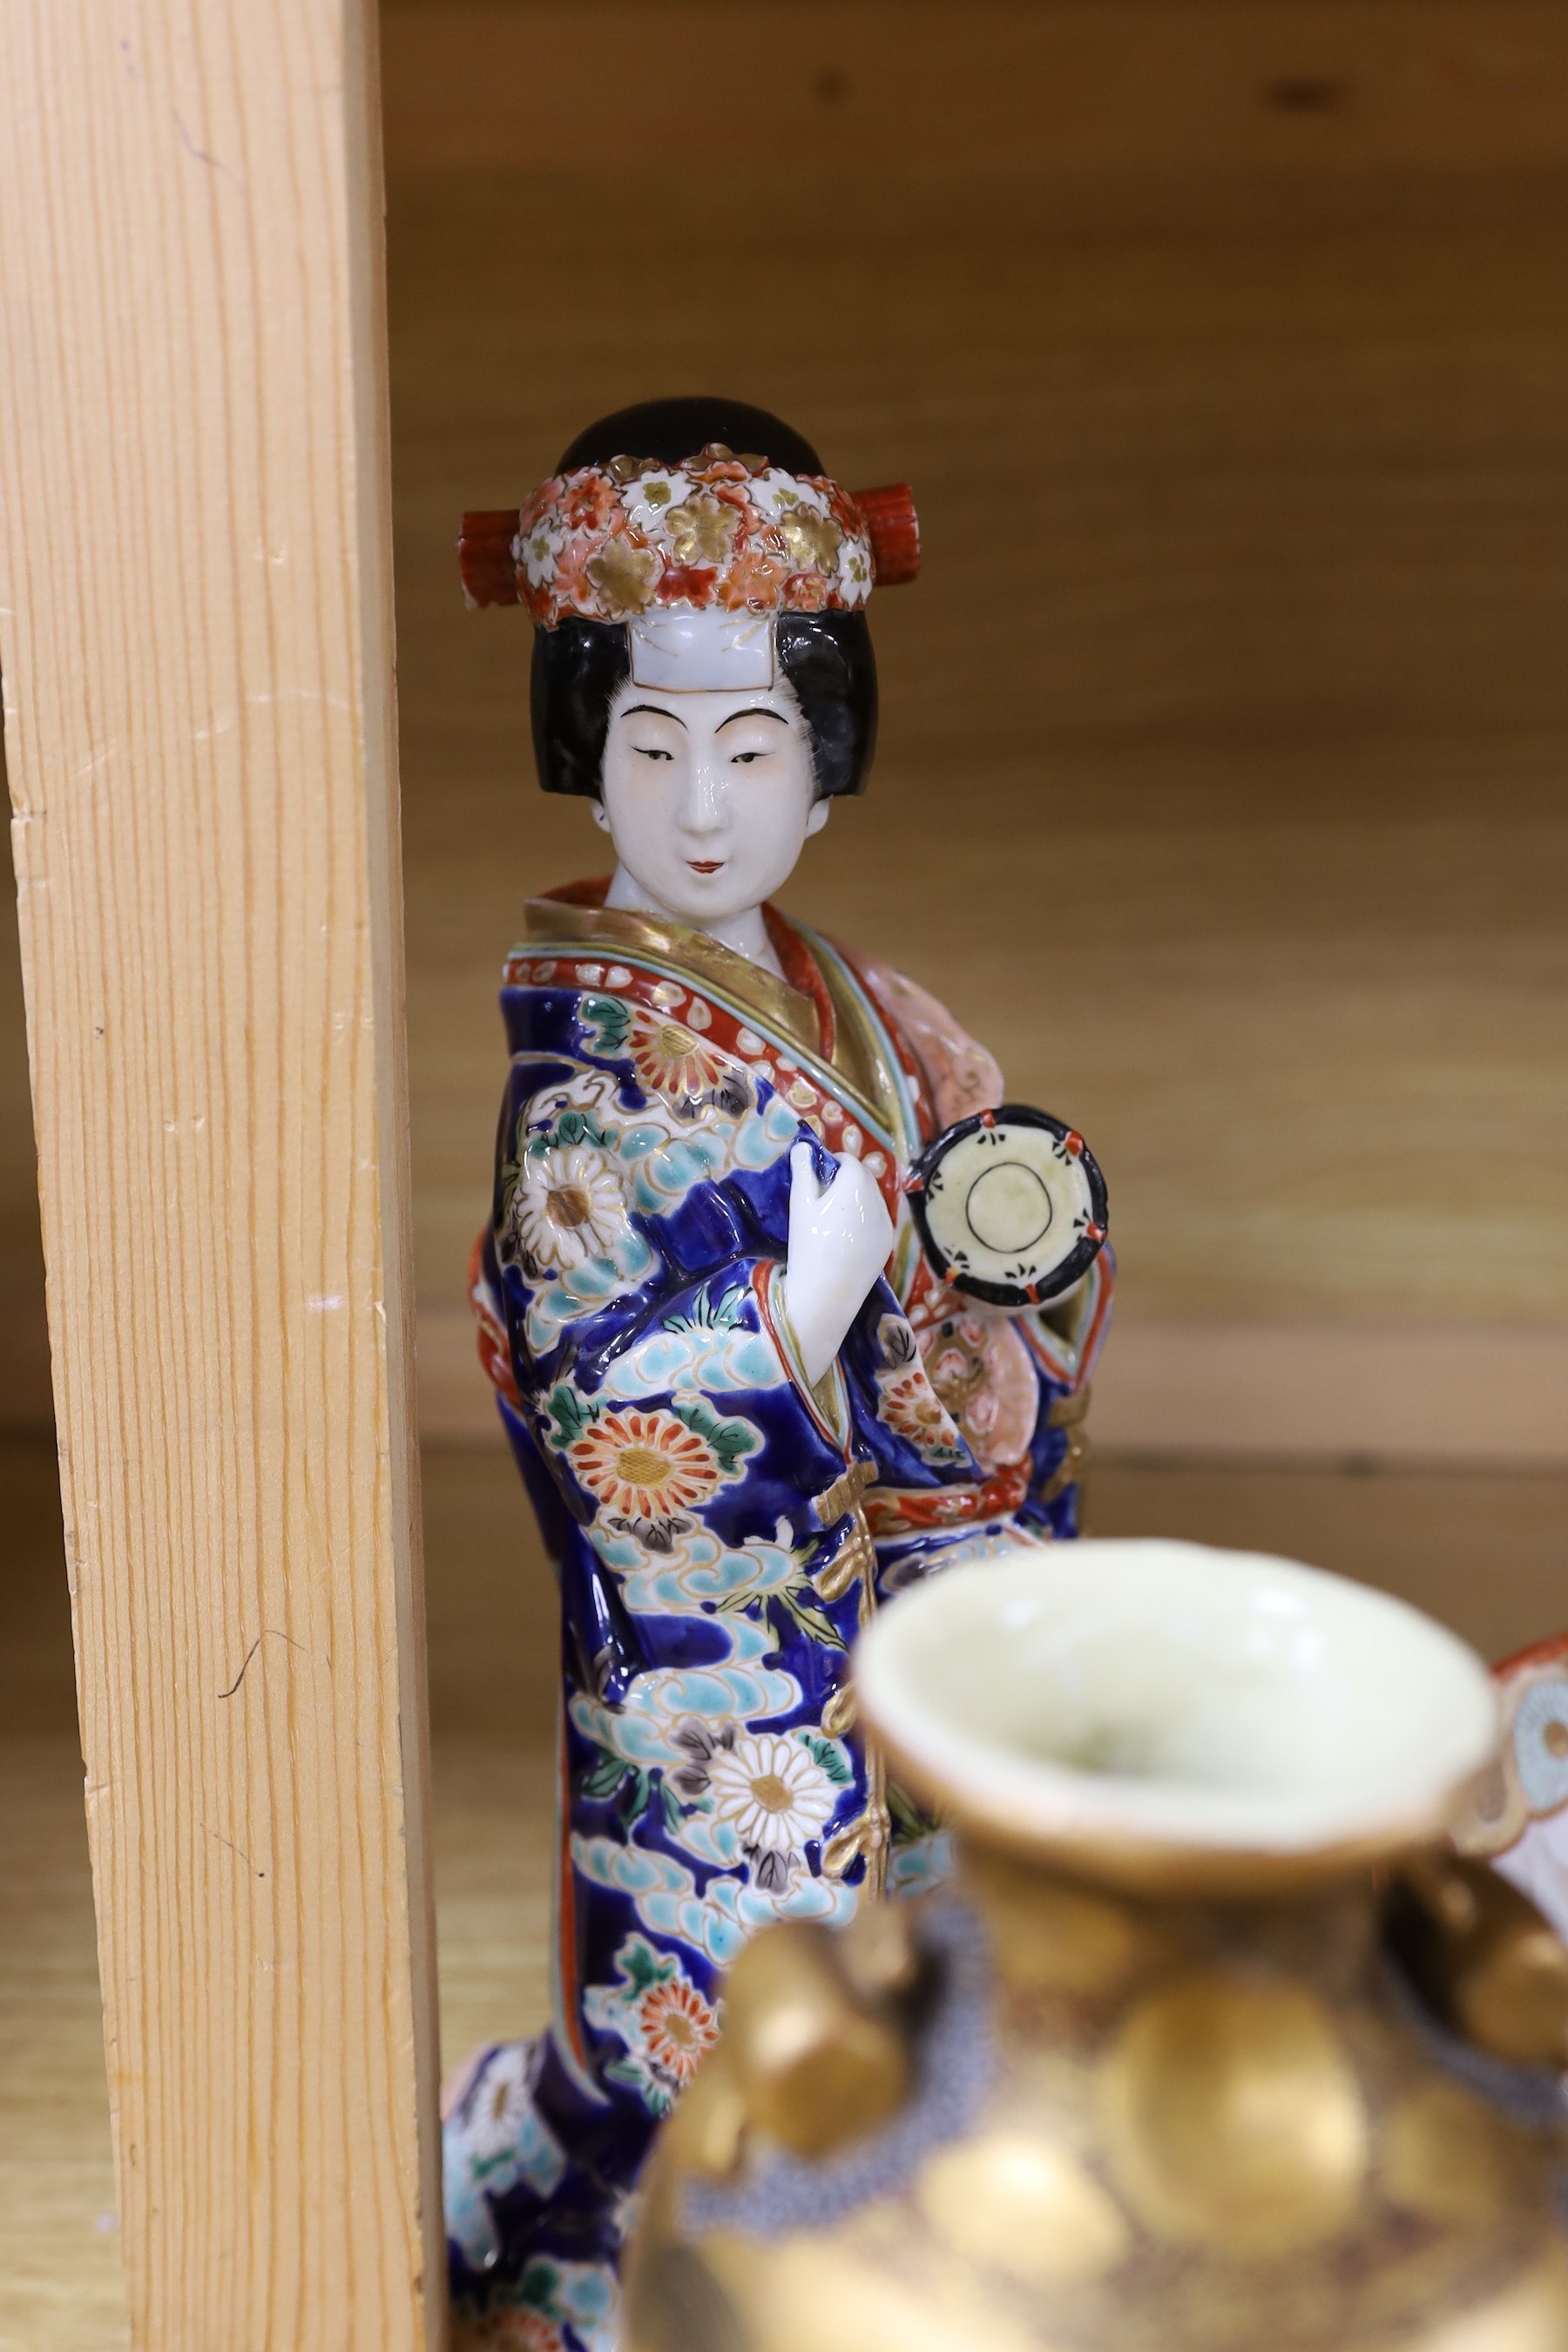 A group of various Japanese ceramics including kutani and satsuma and a similar bronze vase